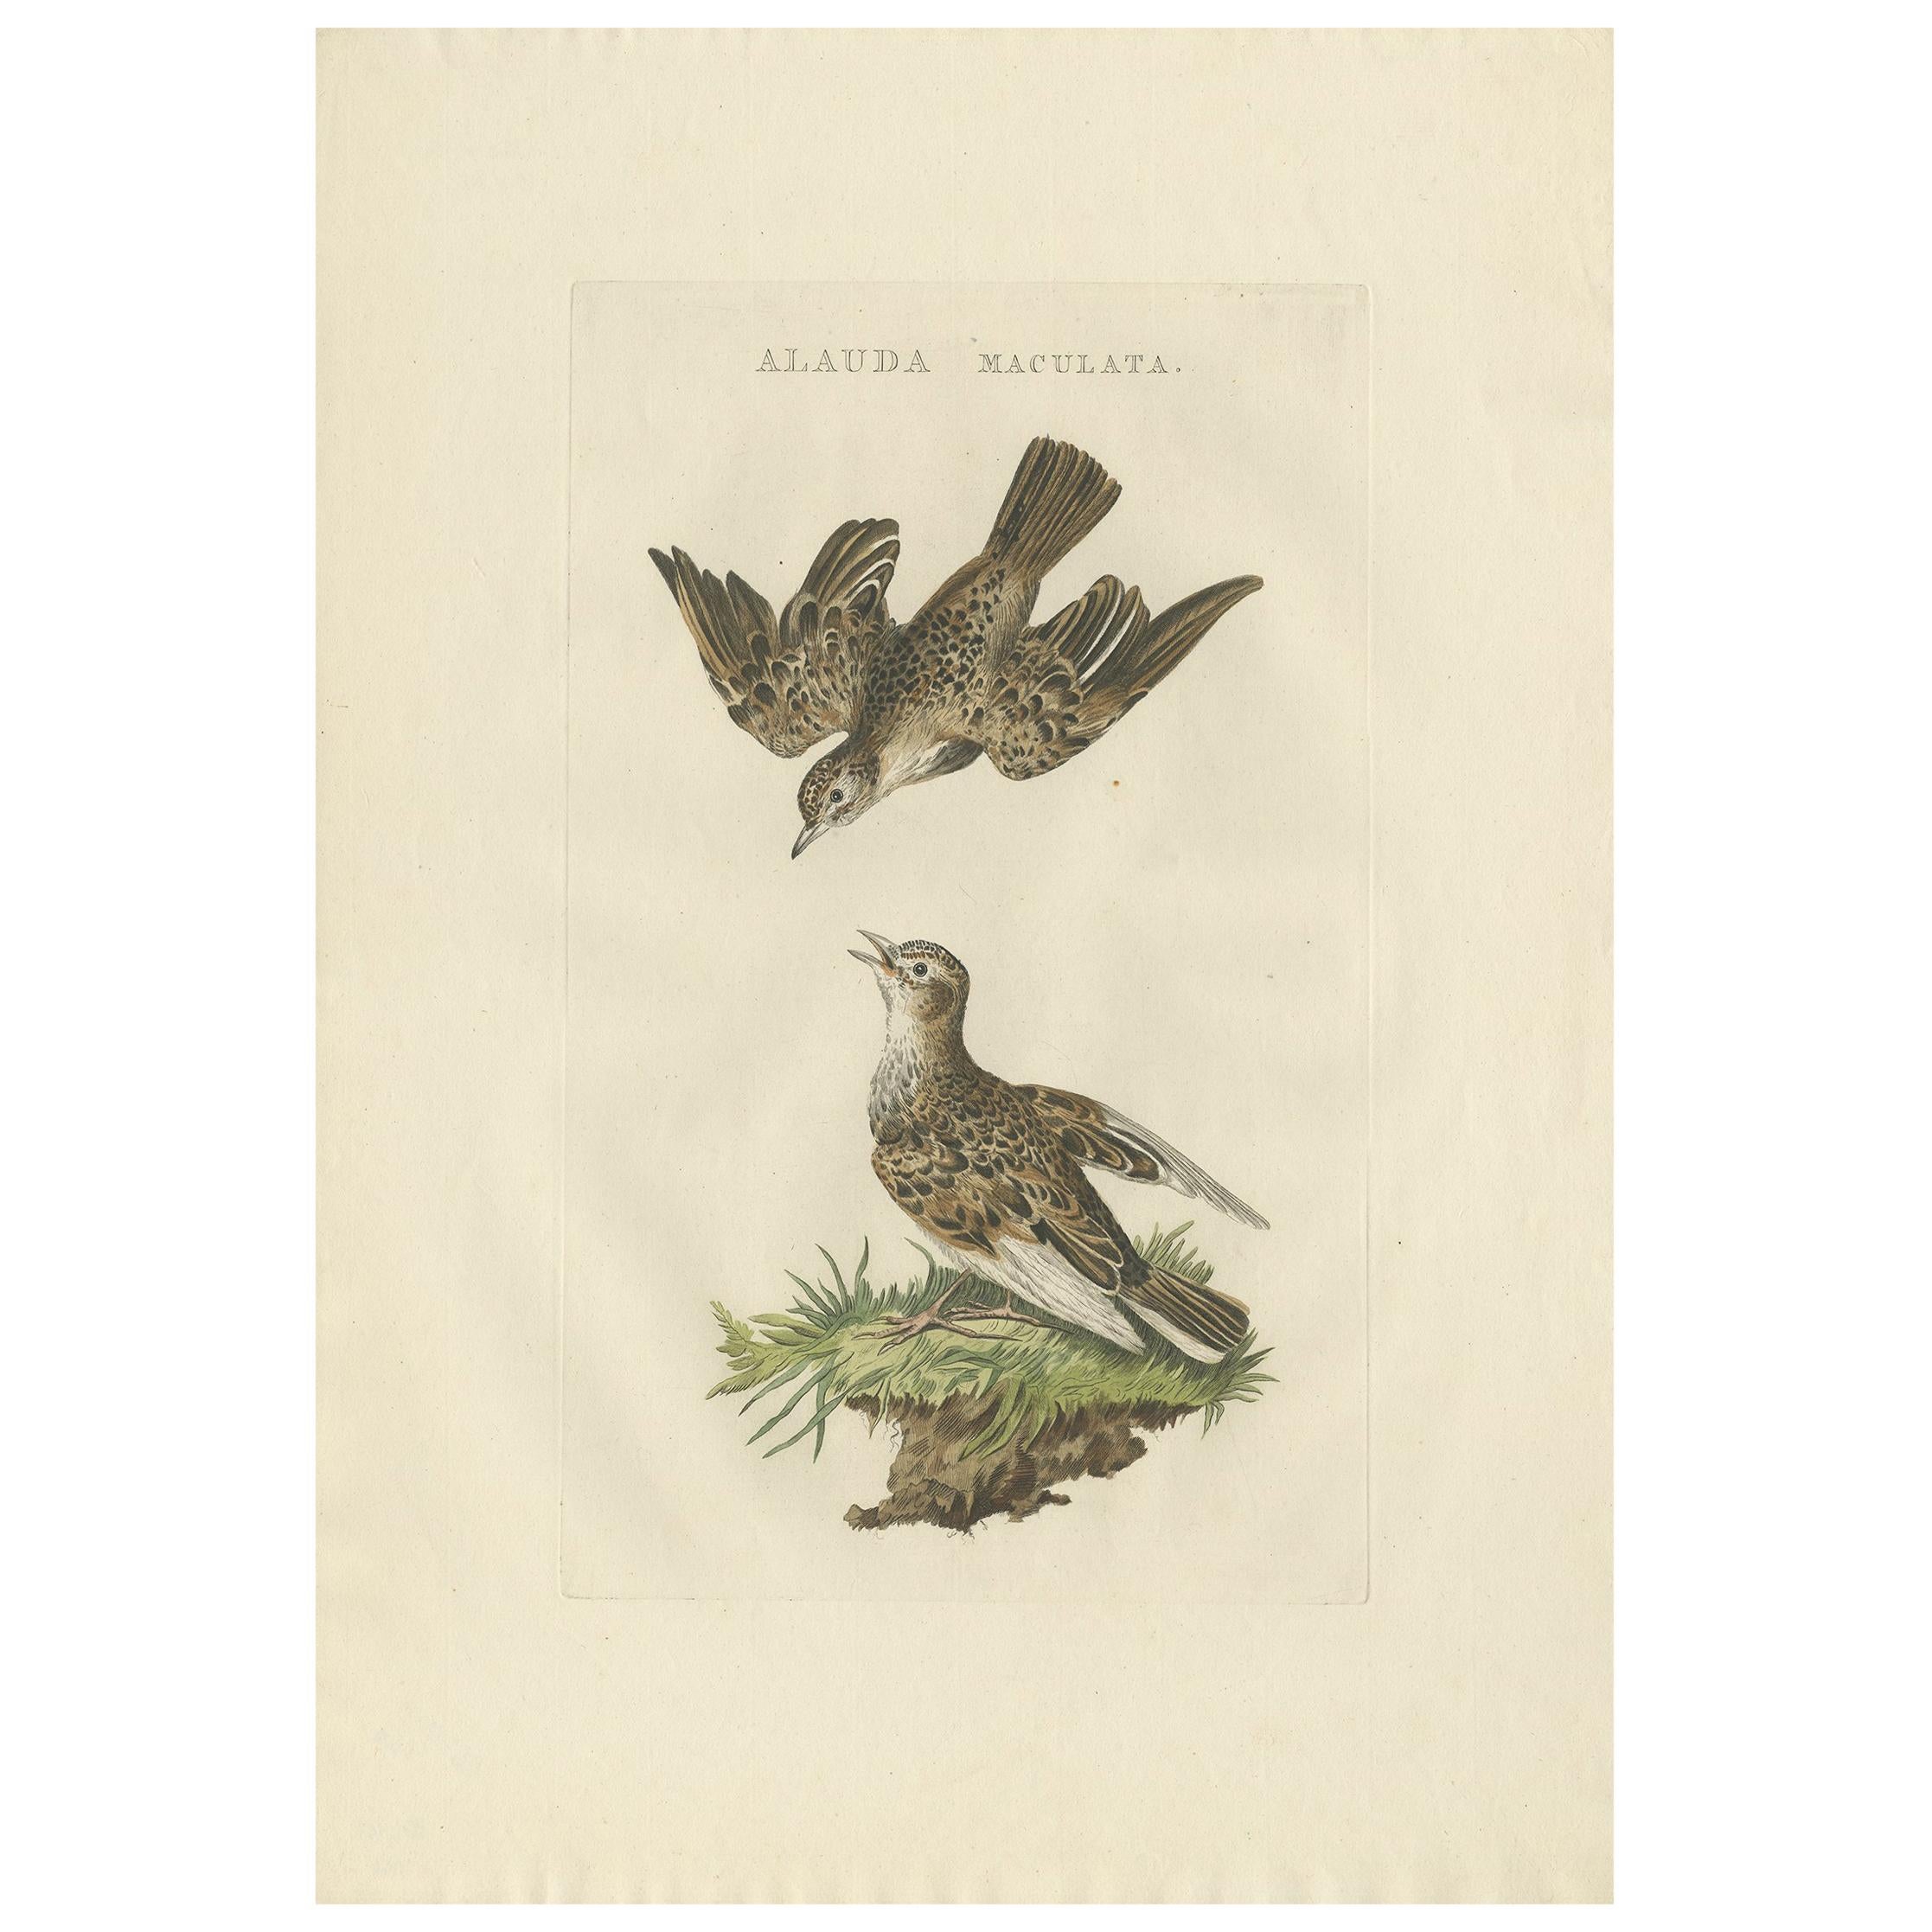 Antique Bird Print of the Eurasian Sky Lark by Sepp and Nozeman, 1809